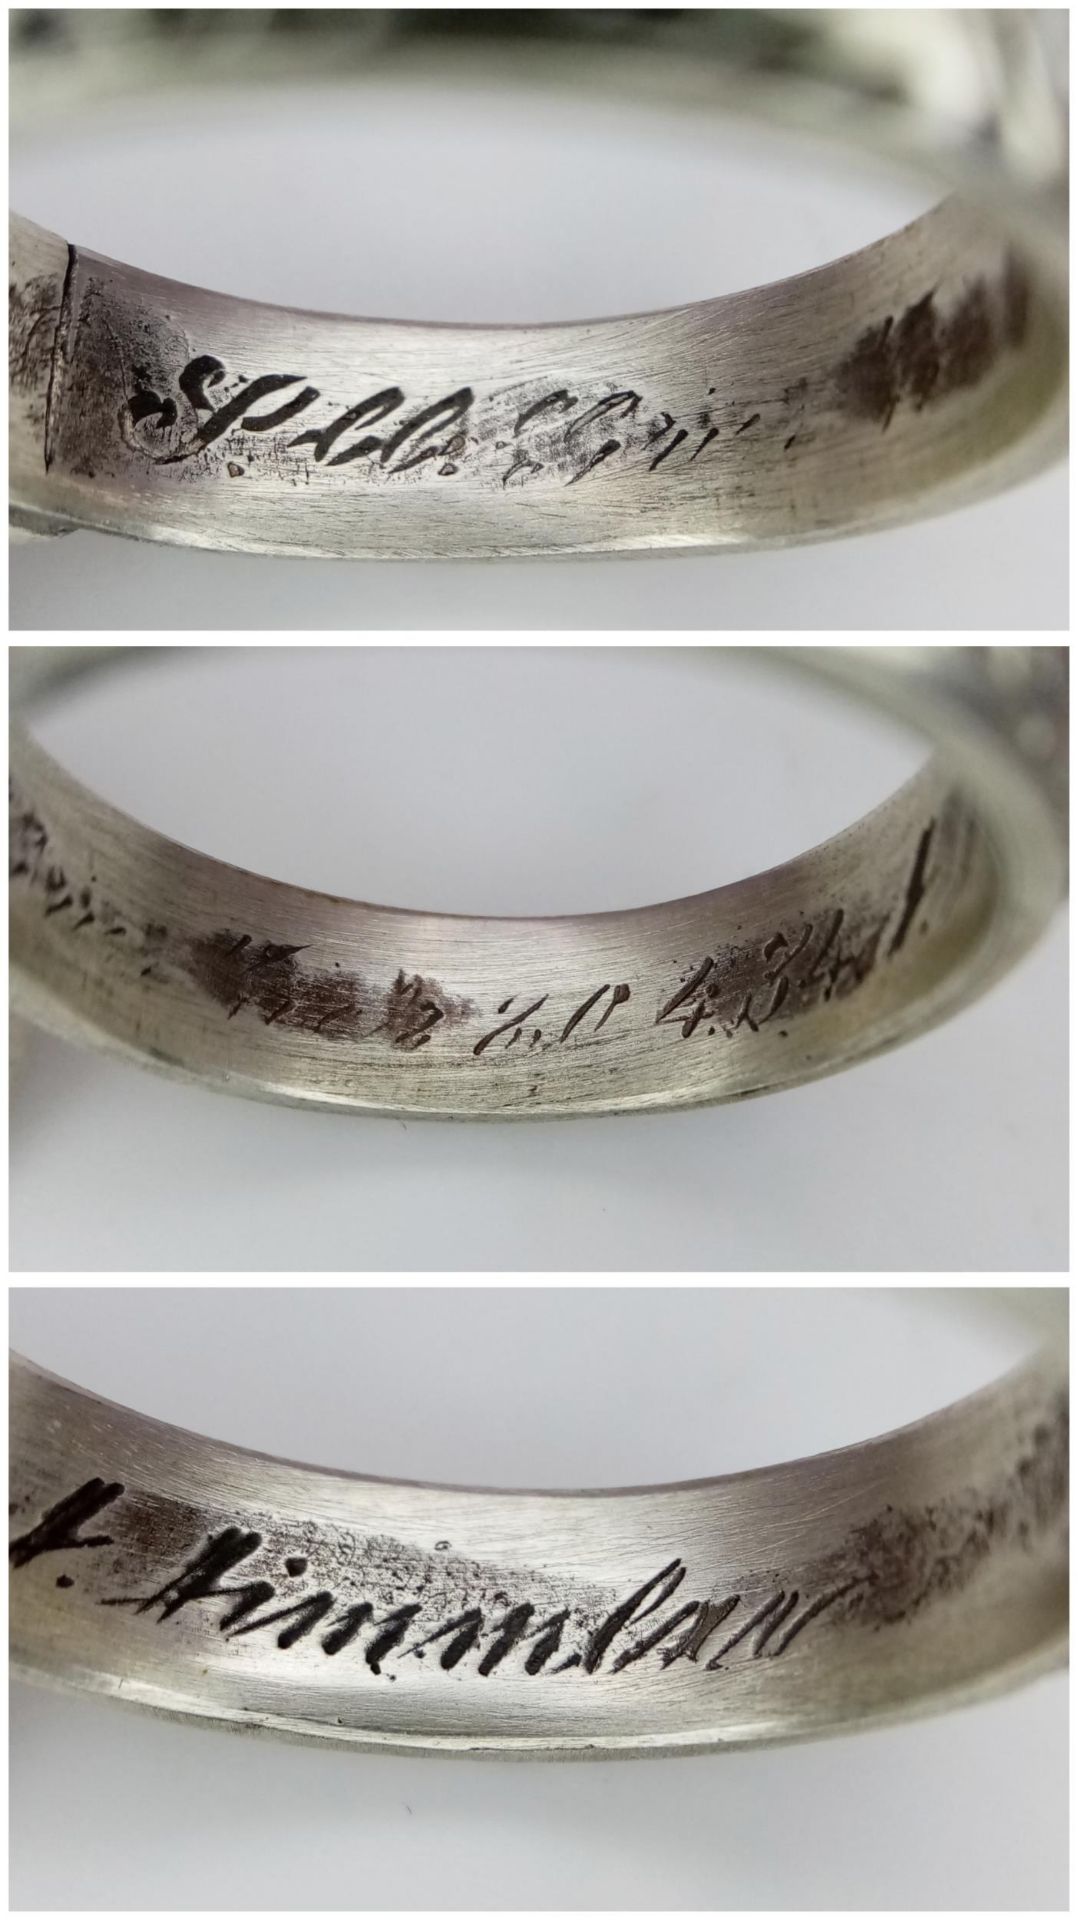 Re-enactors Silver SS Honour Ring. UK Size: V.5 US Size: V. Complete with Himmler Signature inside. - Image 3 of 3